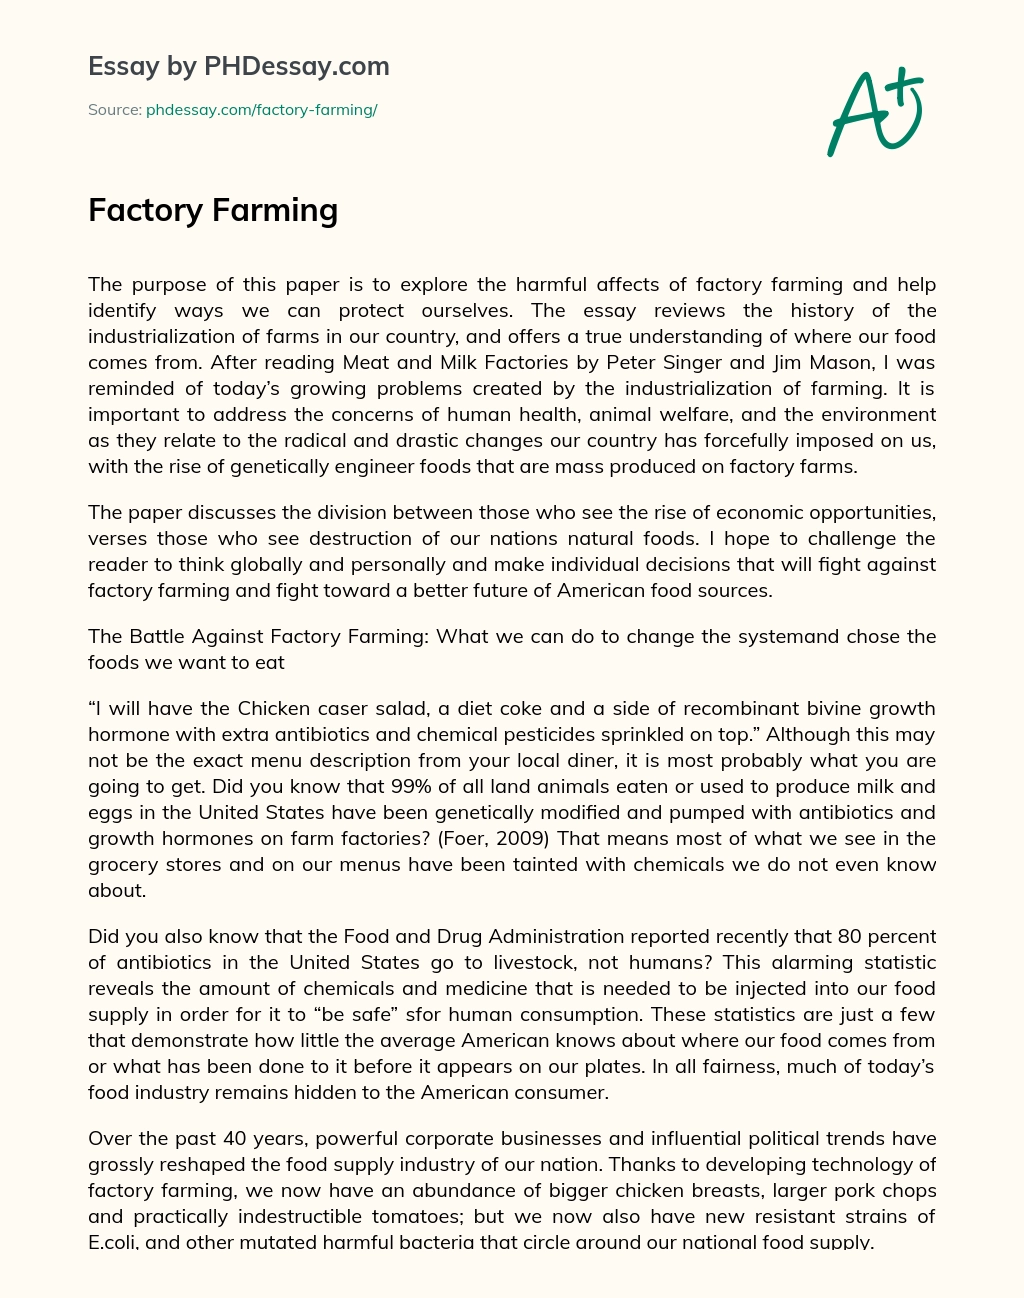 Factory Farming essay